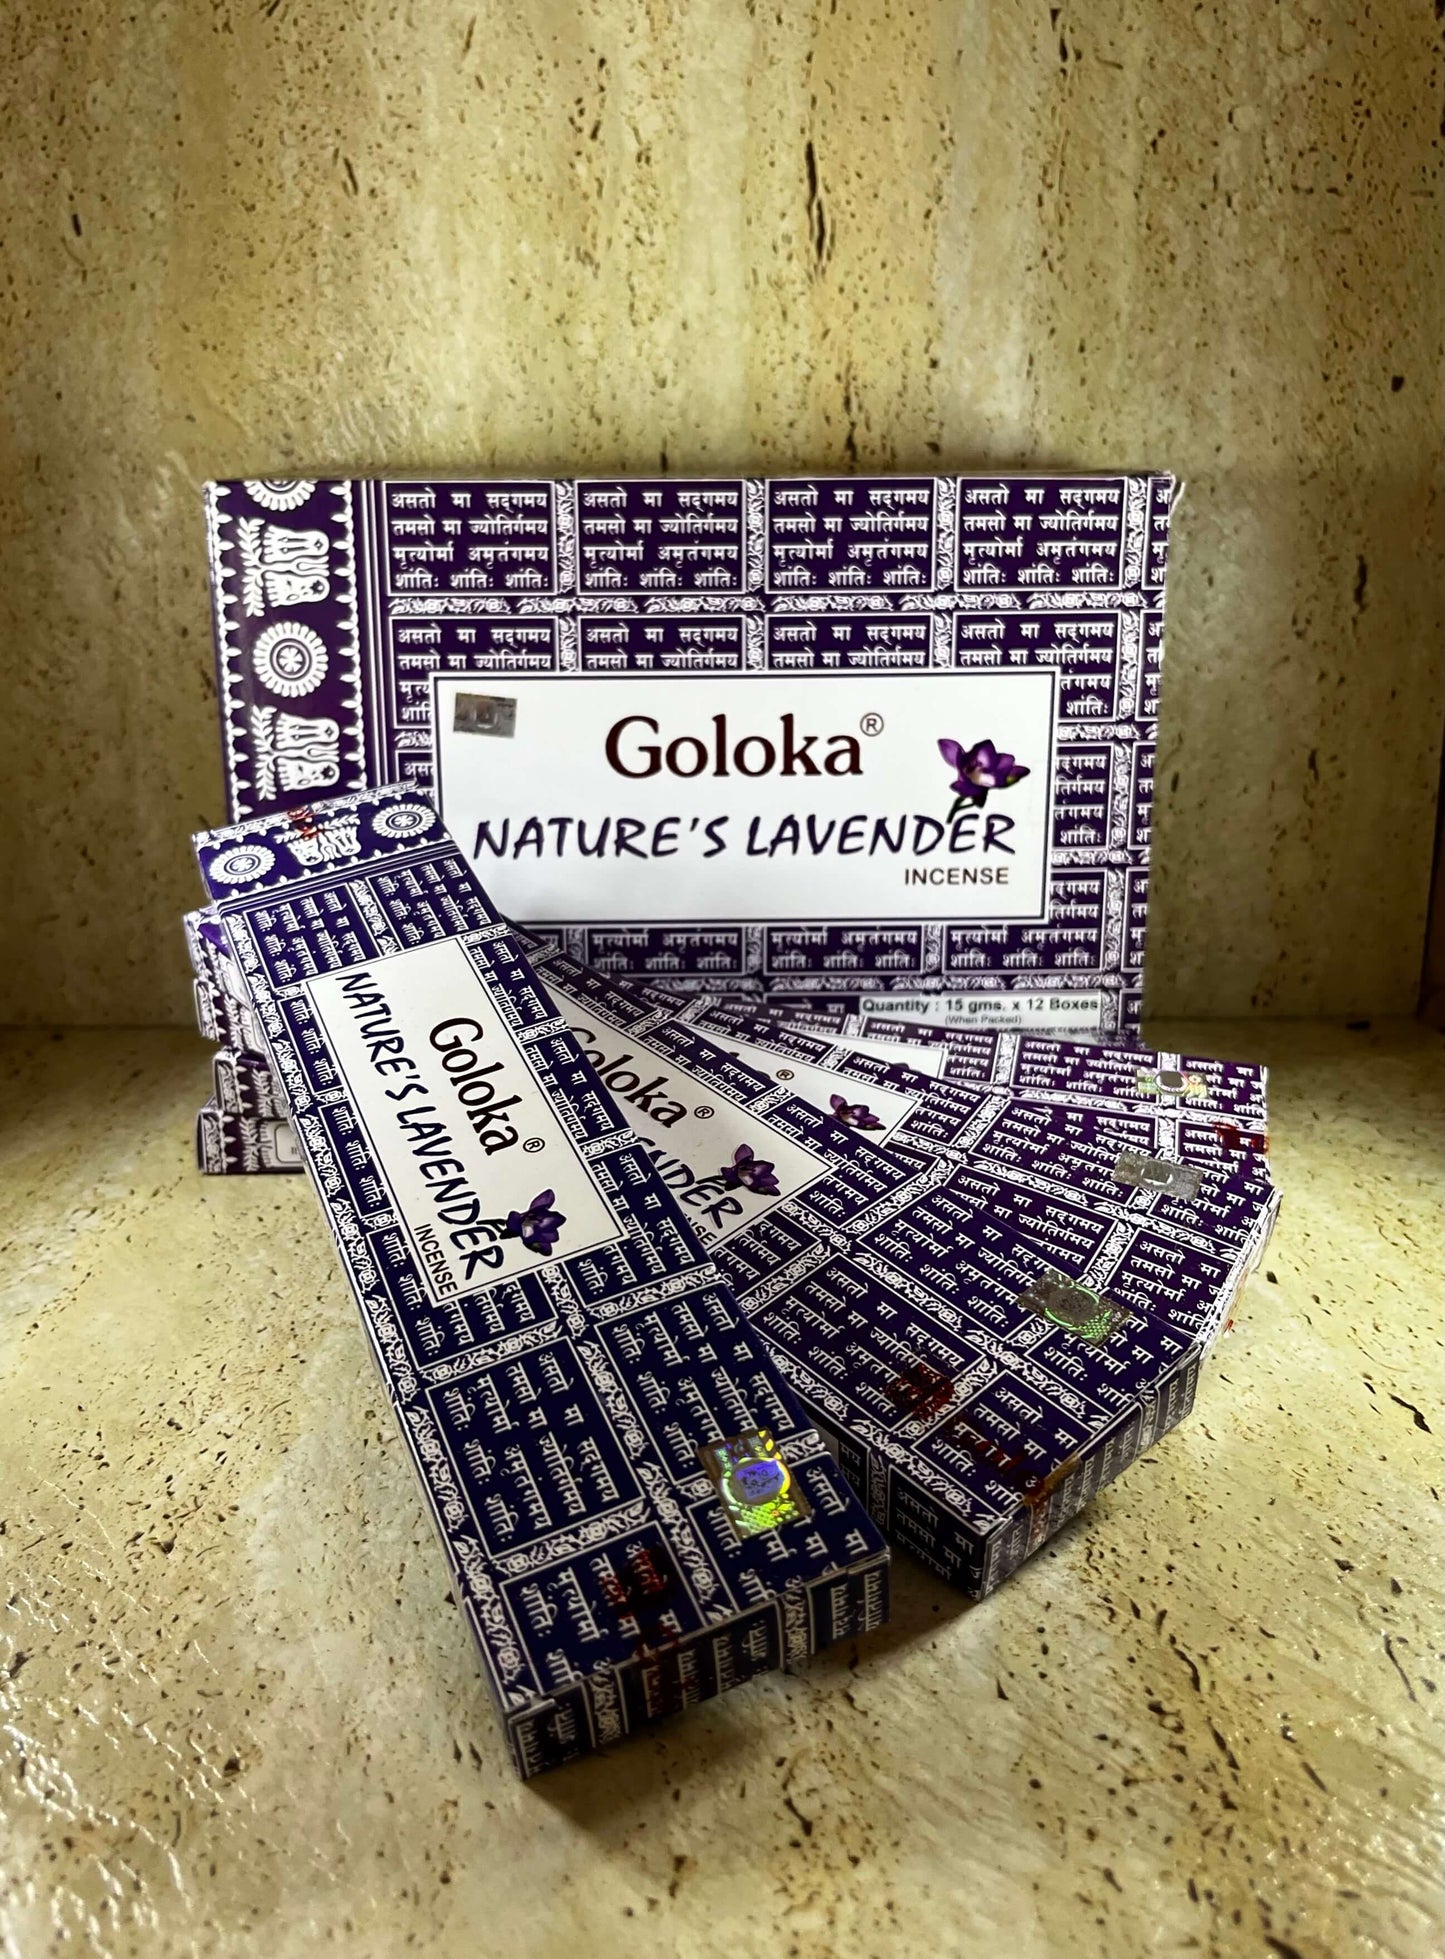 Goloka Nature's Lavender incense